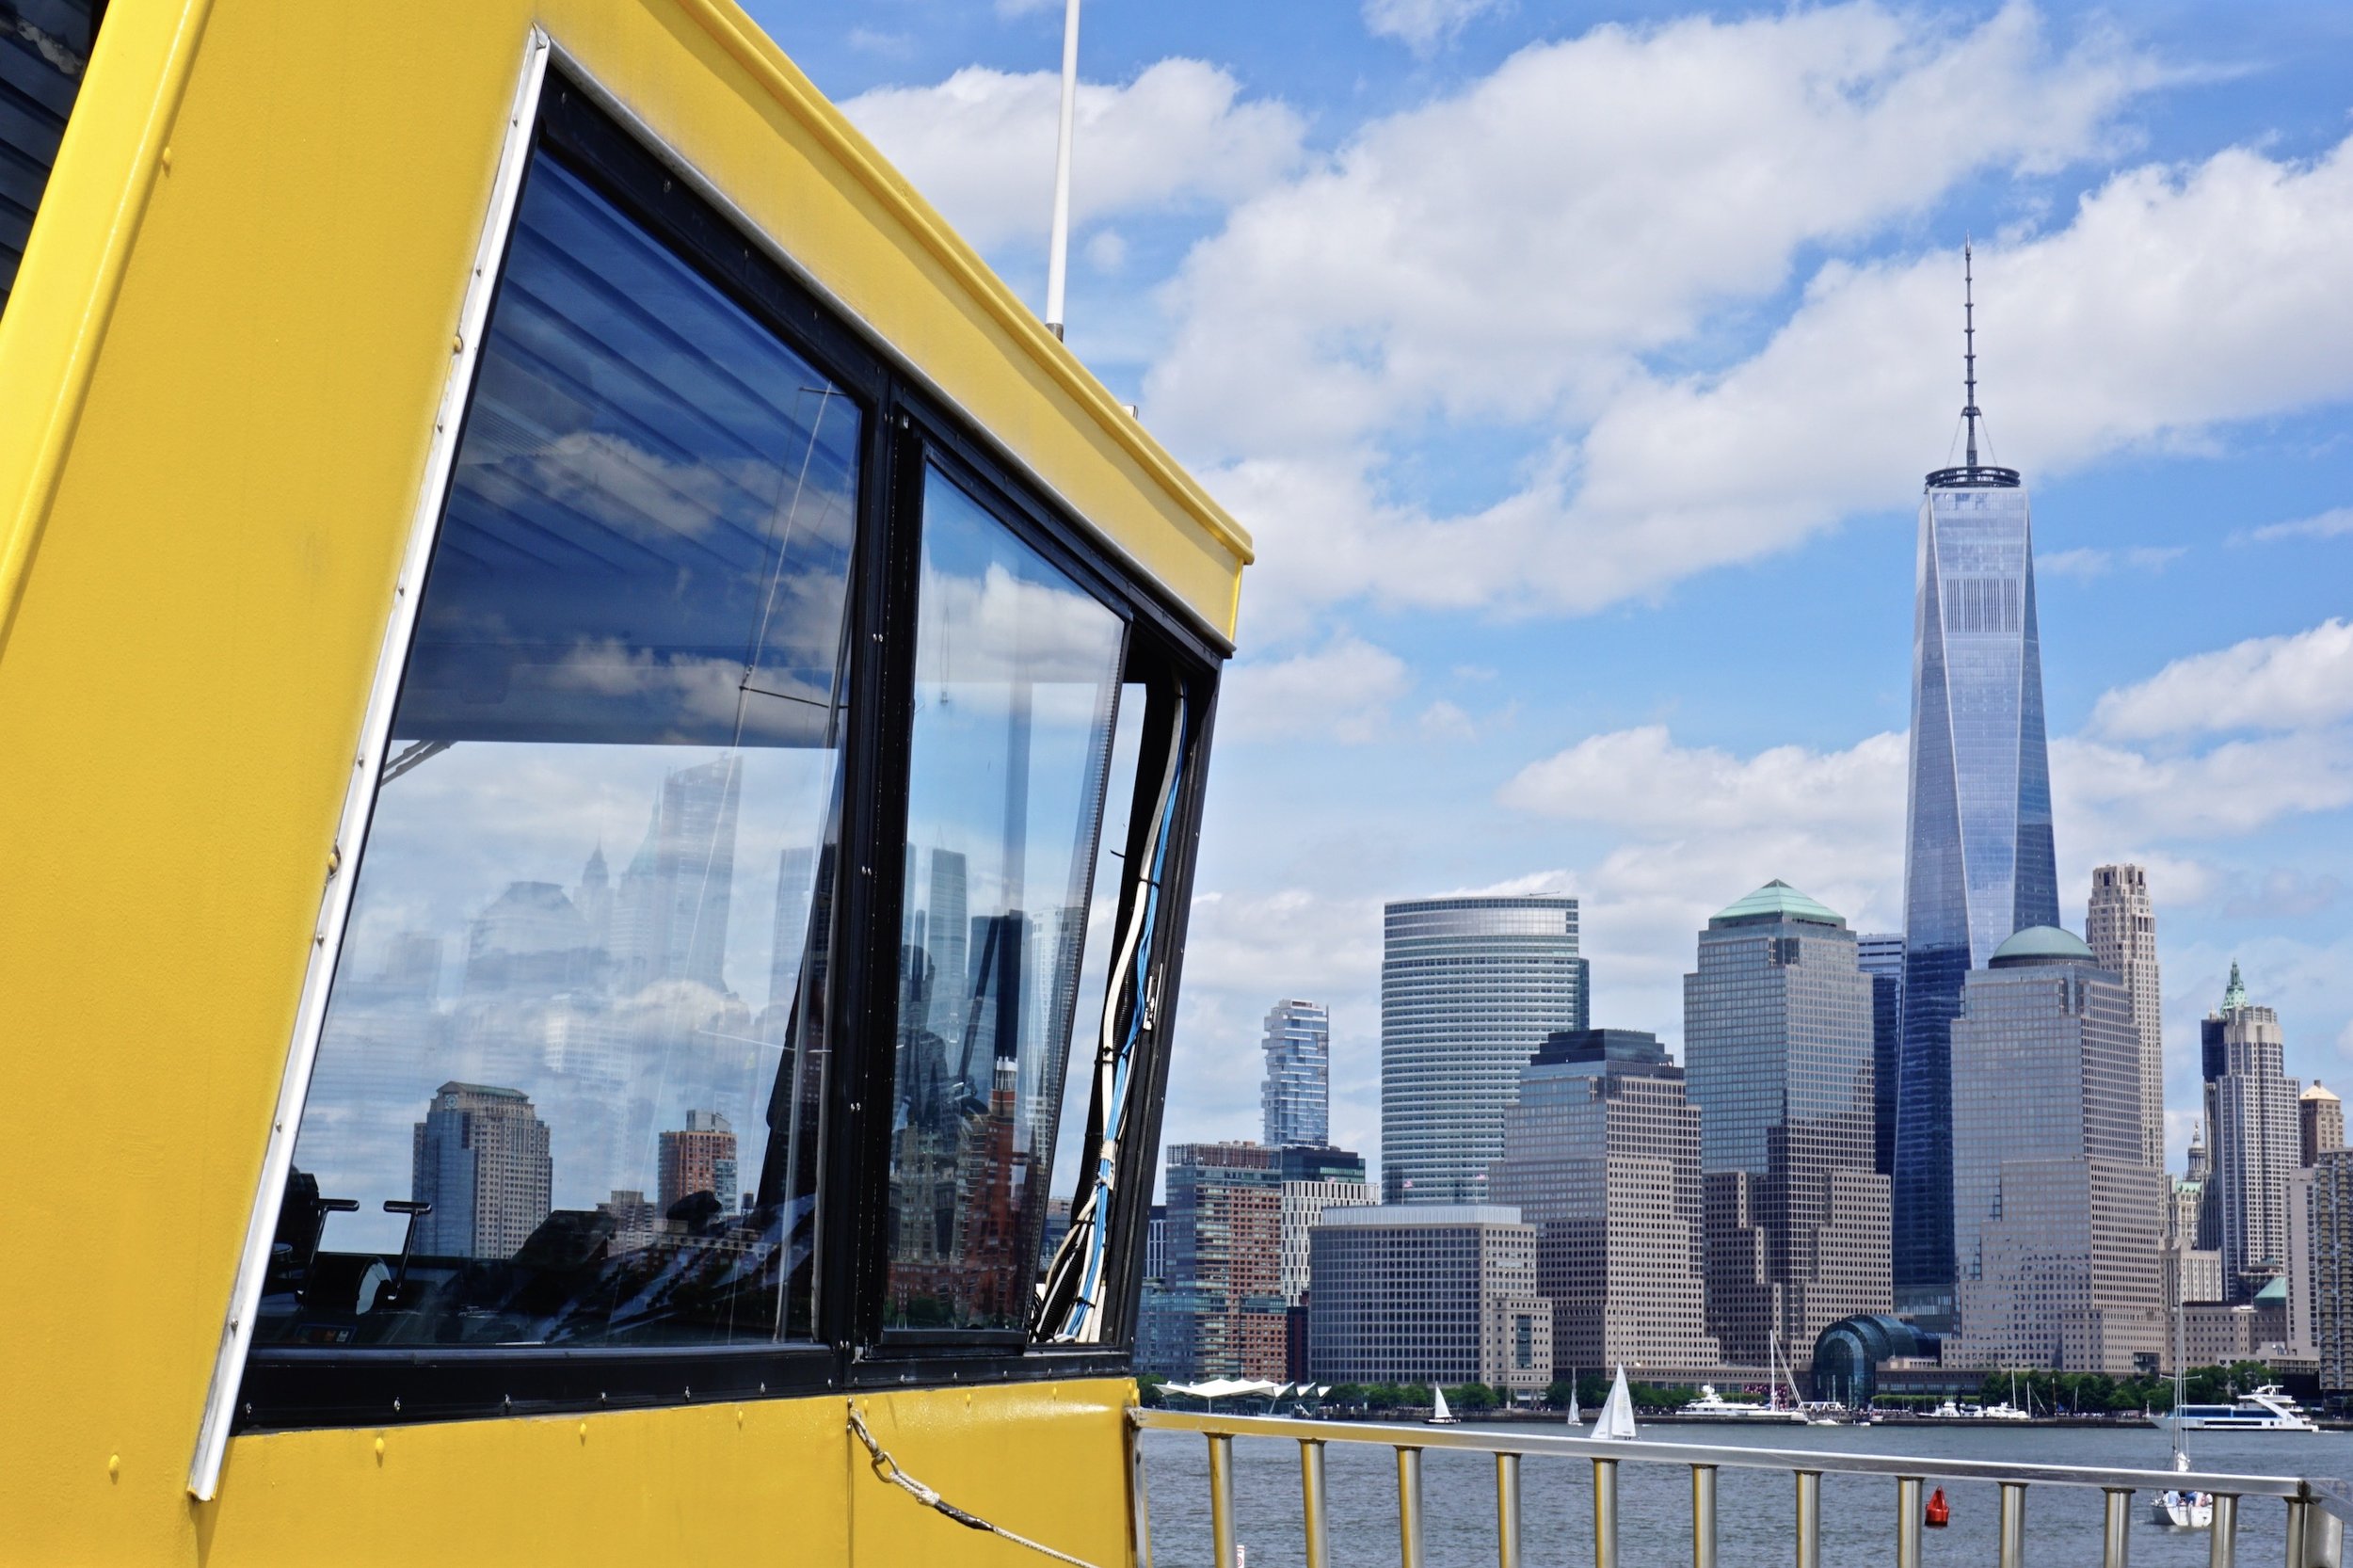 Ferry Views across the Hudson